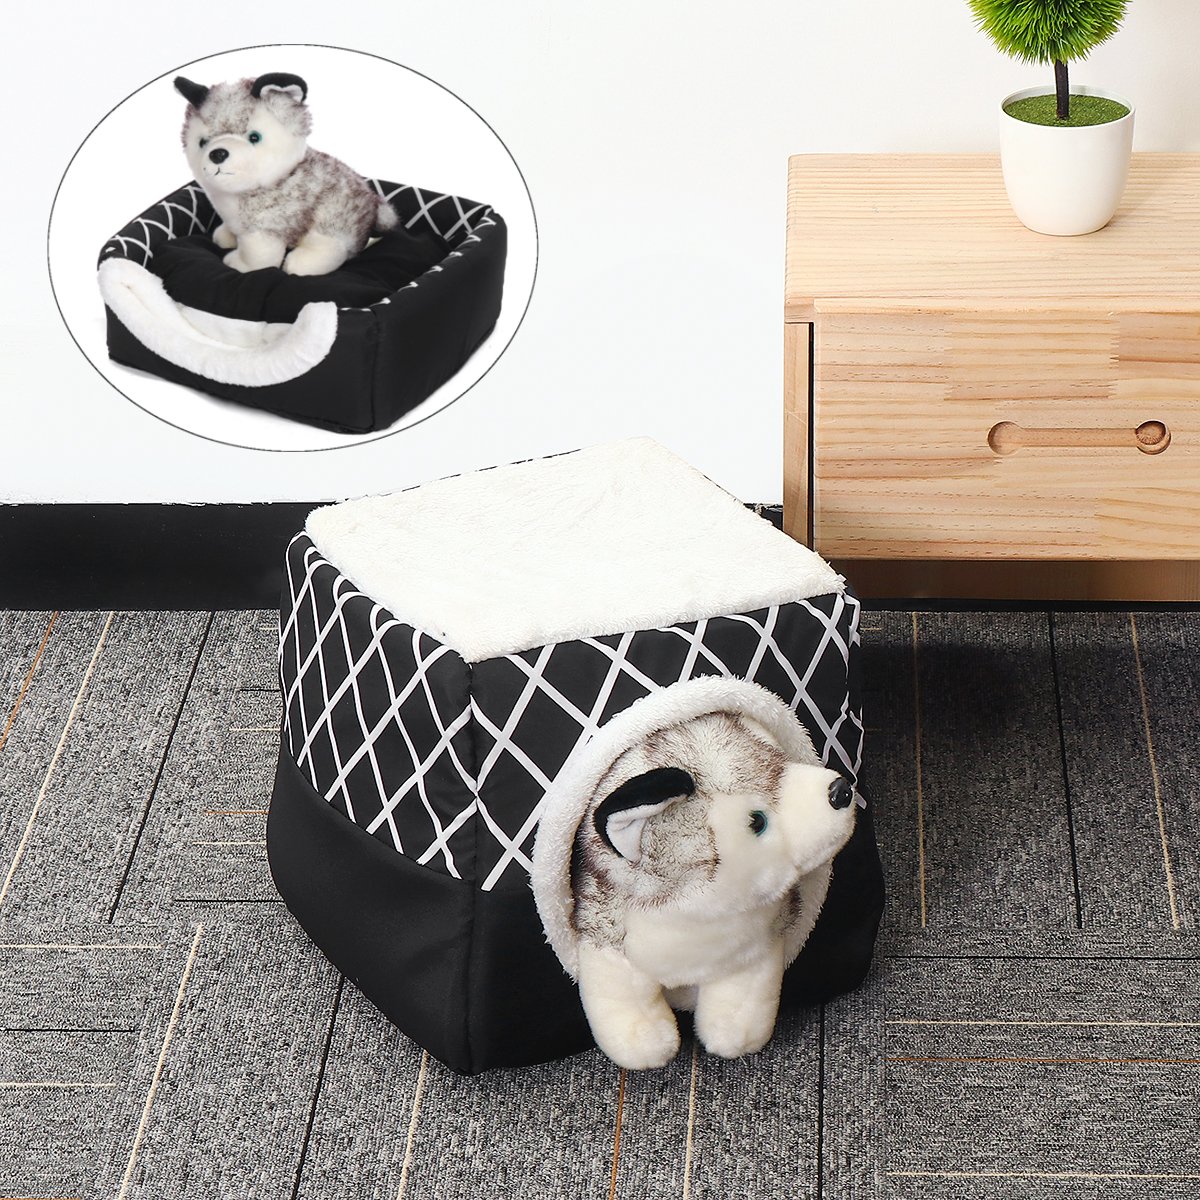 

Folding Fleece Warm Puppy House Dog Cat Pet Bed Cave Sleeping Mat Pad Soft Cushion